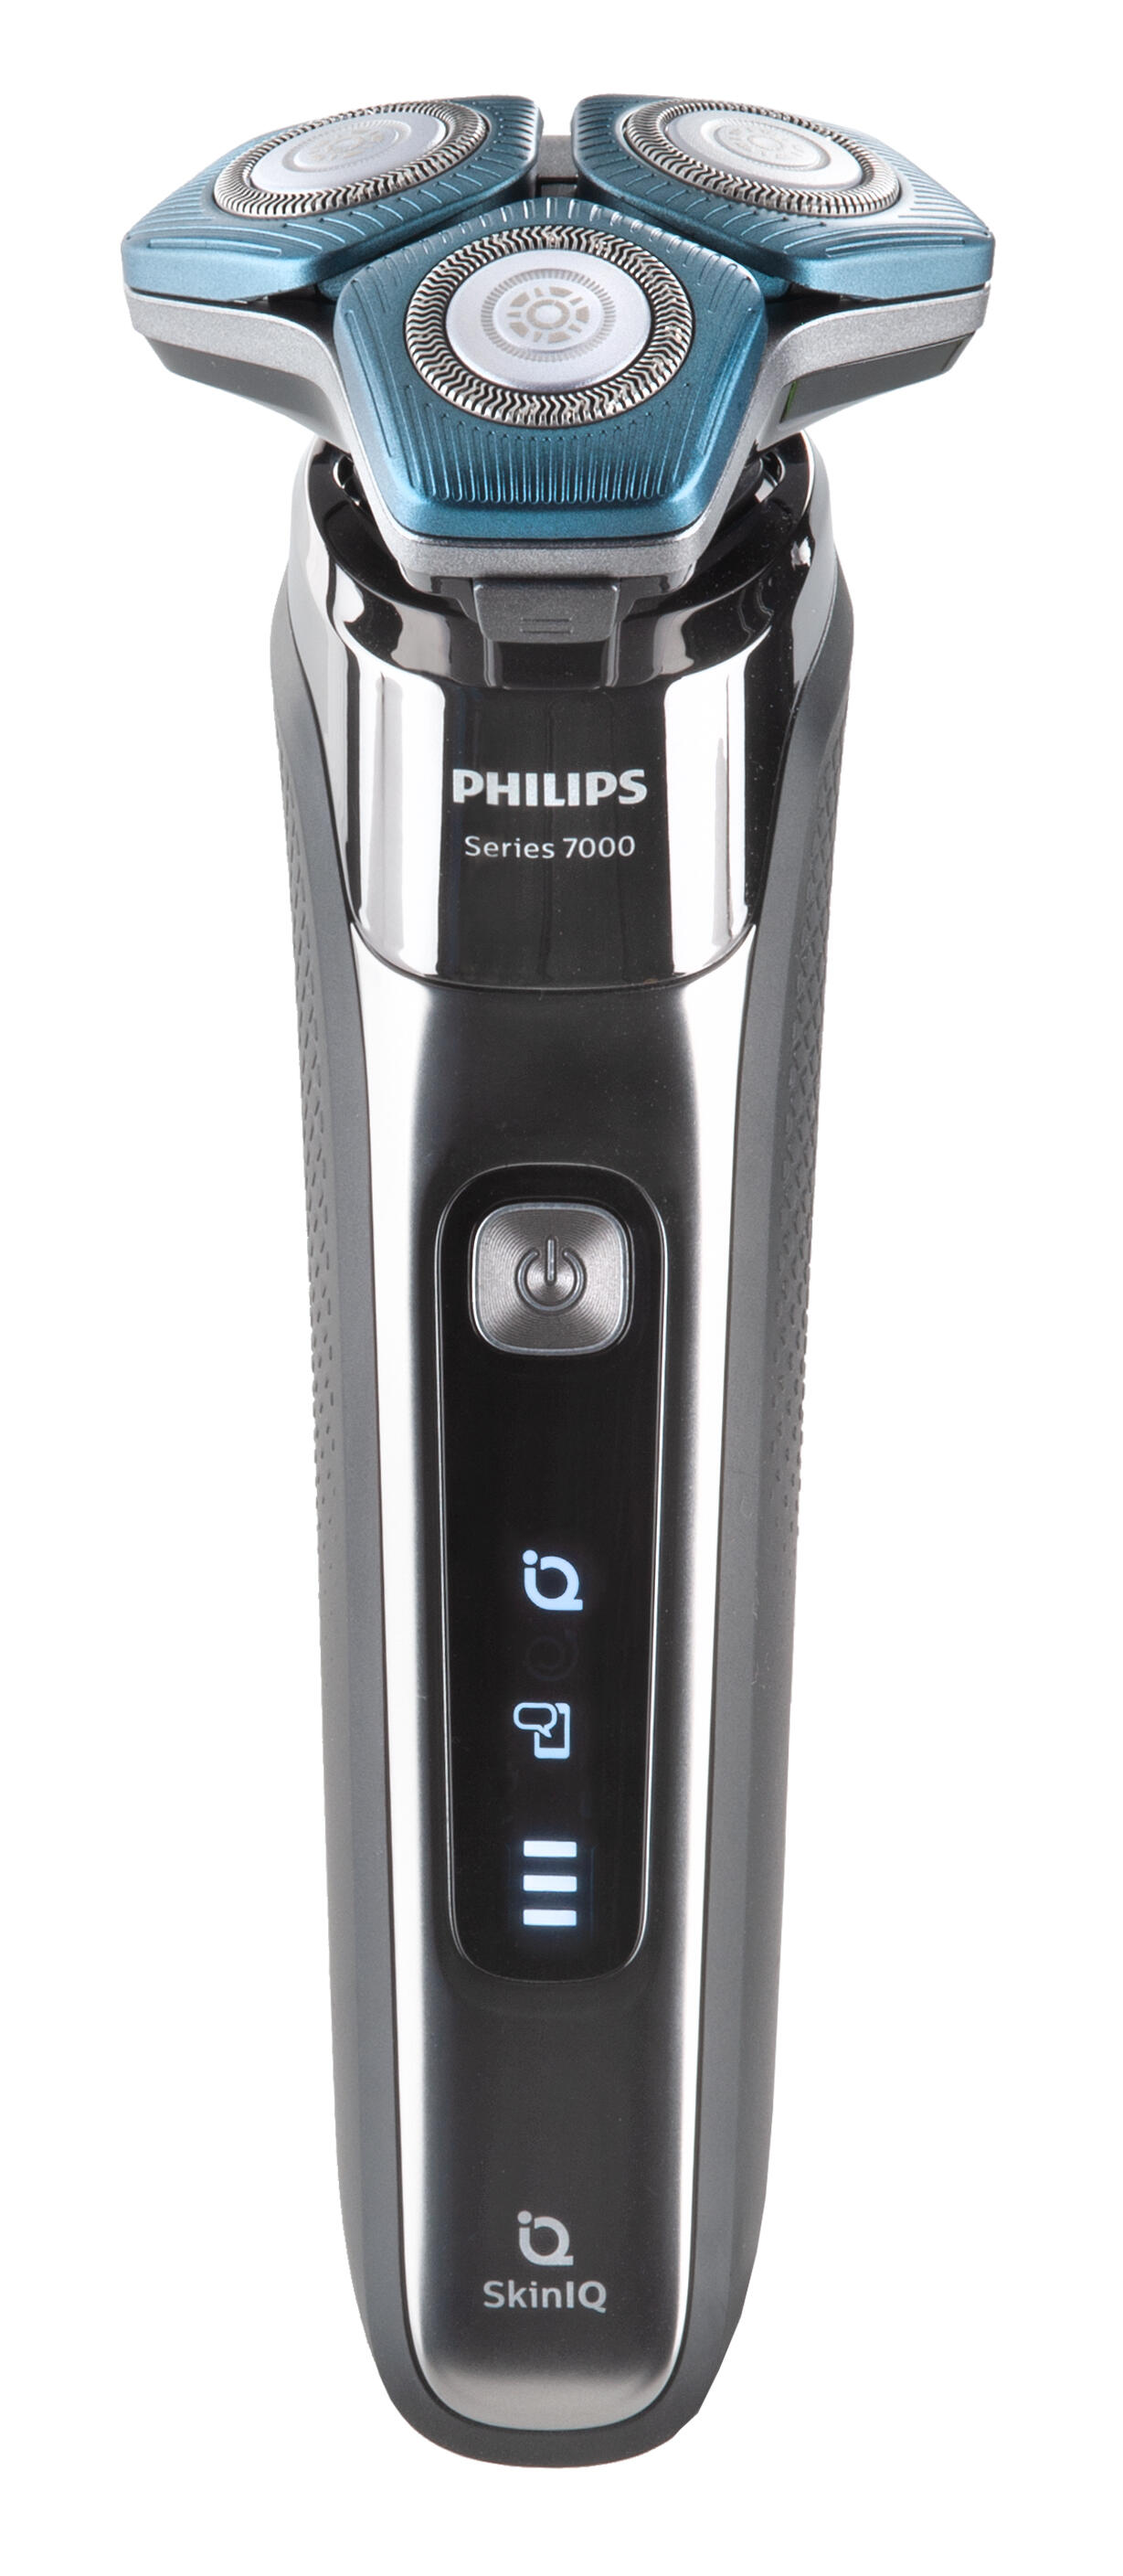 Series 7000 S7782/53 Philips